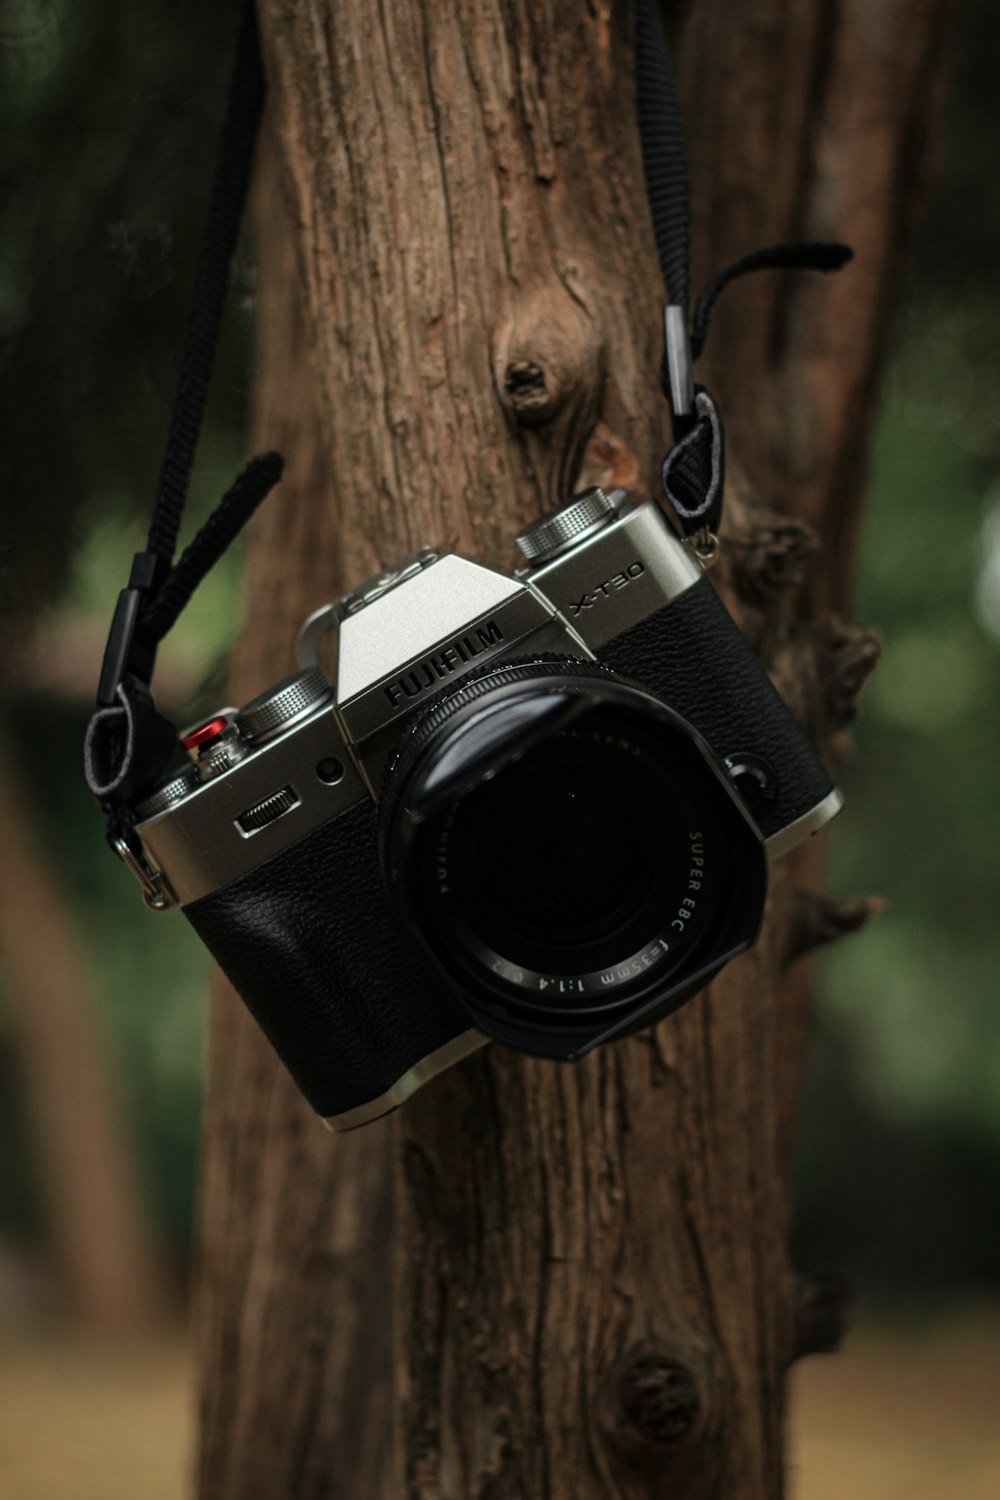 Una macchina fotografica appesa a un albero in una foresta